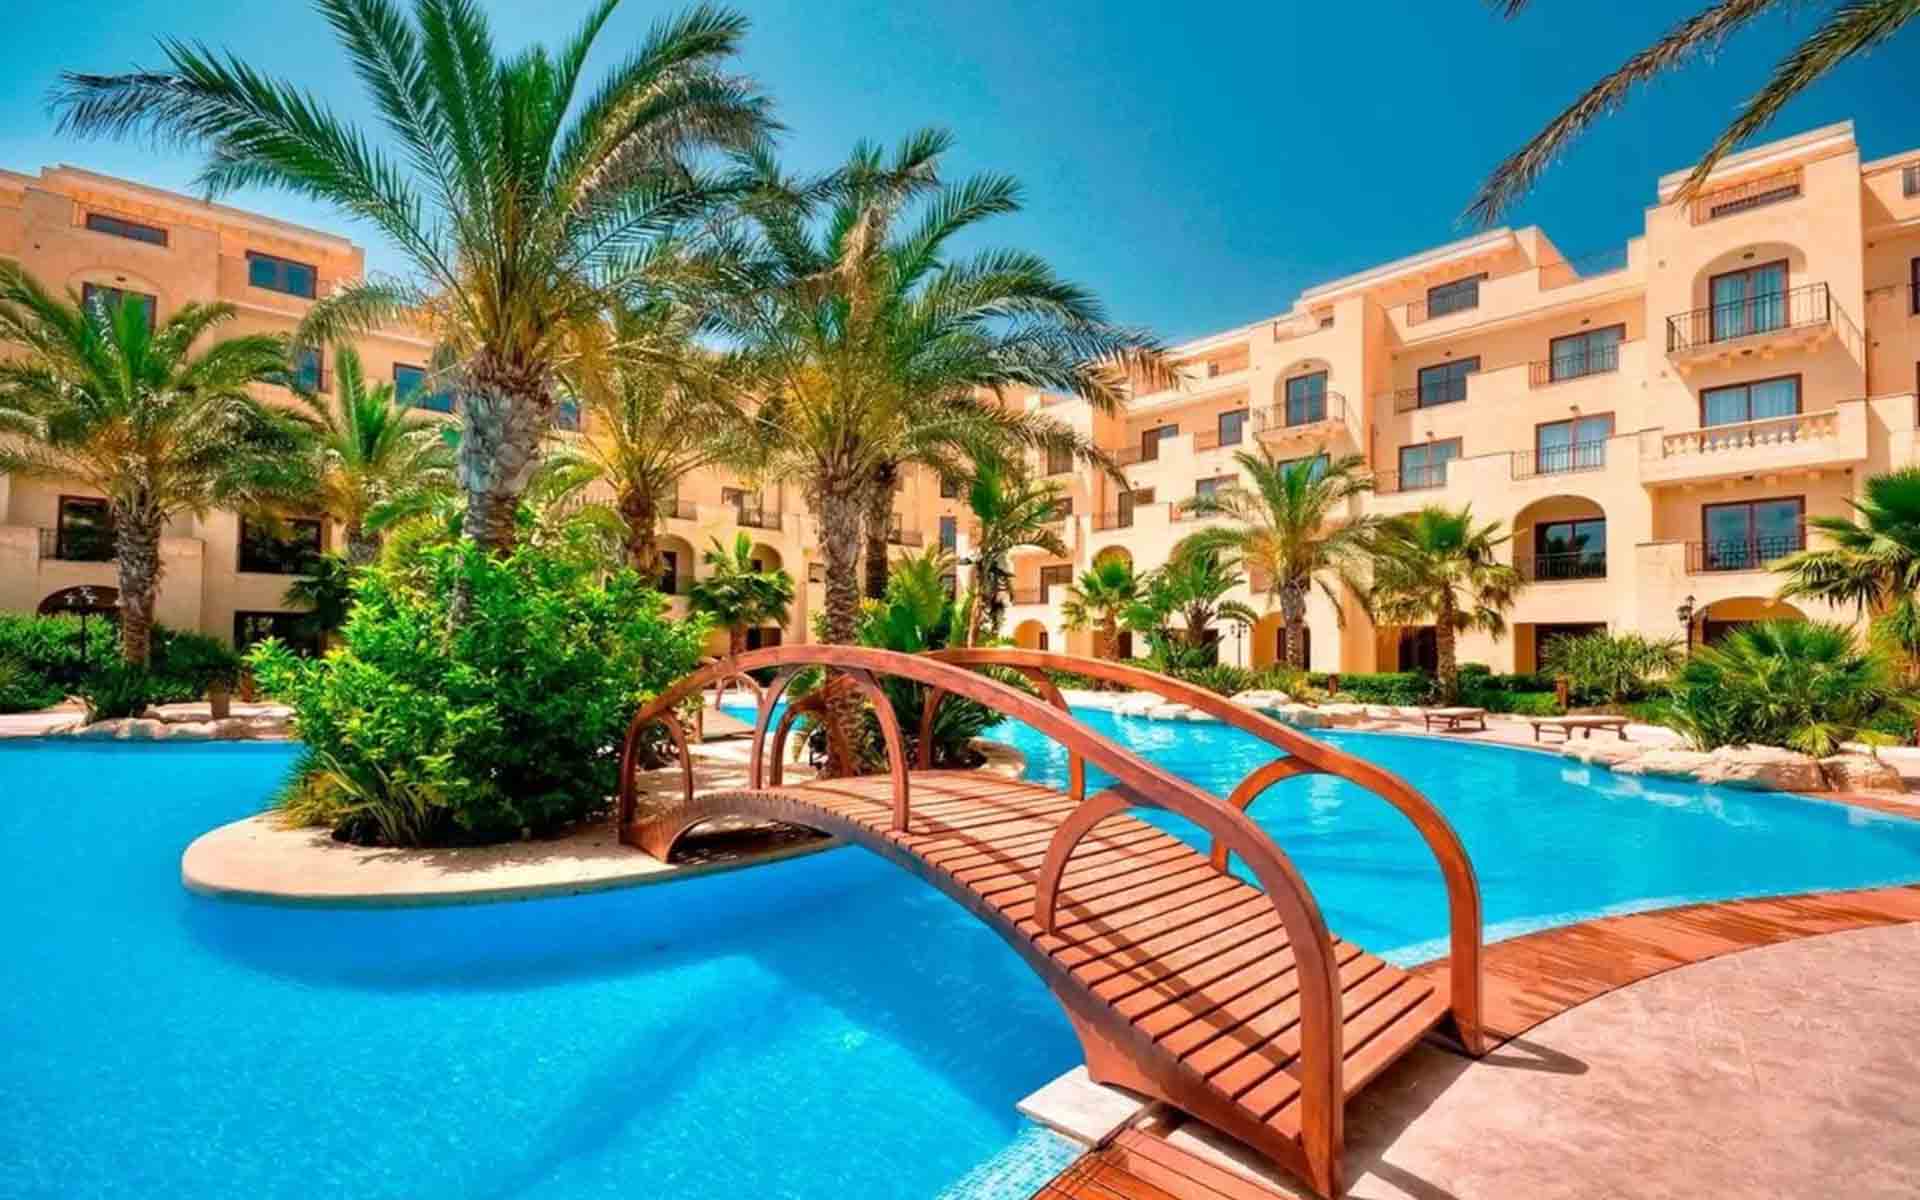 Kempinski Hotel Gozo. Check rates and availability.